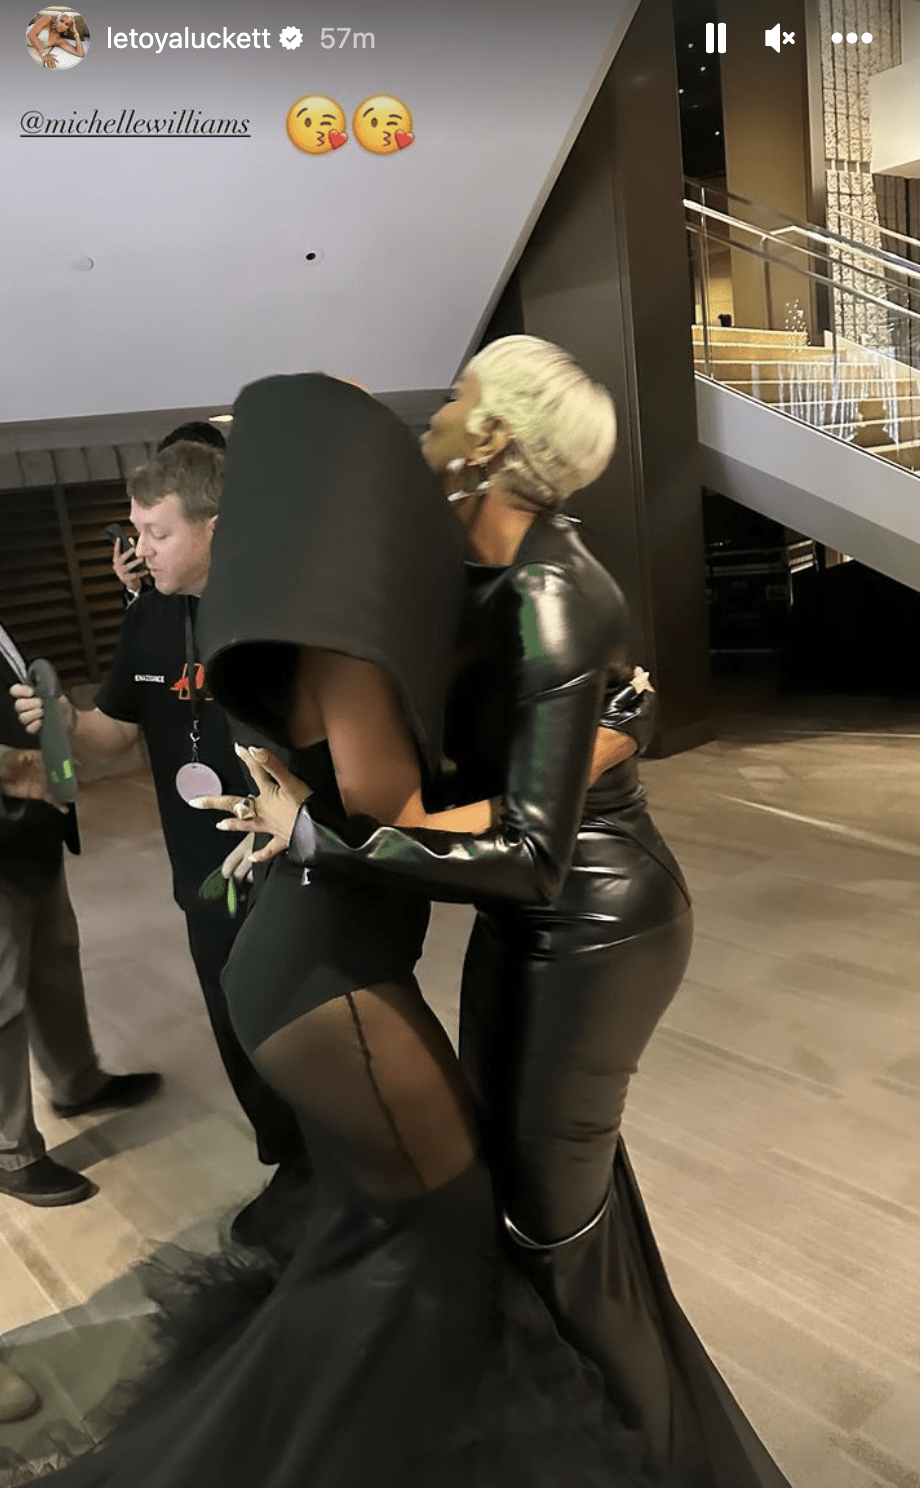 Beyoncé Reunites with Destiny's Child in Futuristic Party Look